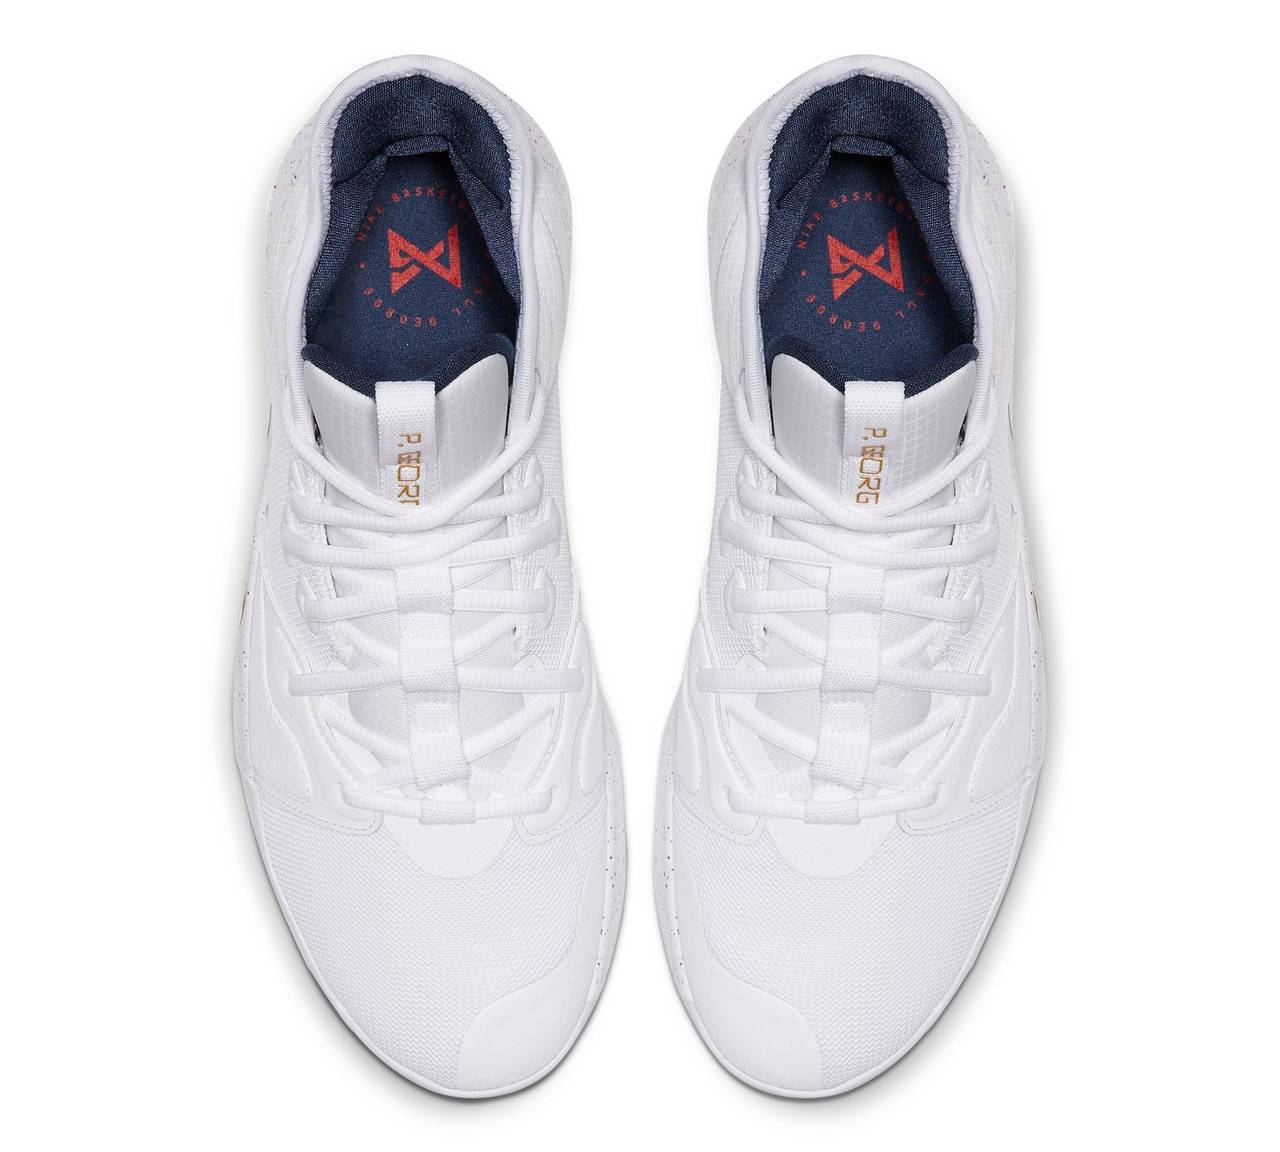 Sneaker Release: Nike PG 3 “White/Metallic Gold” Men’s Basketball Shoe